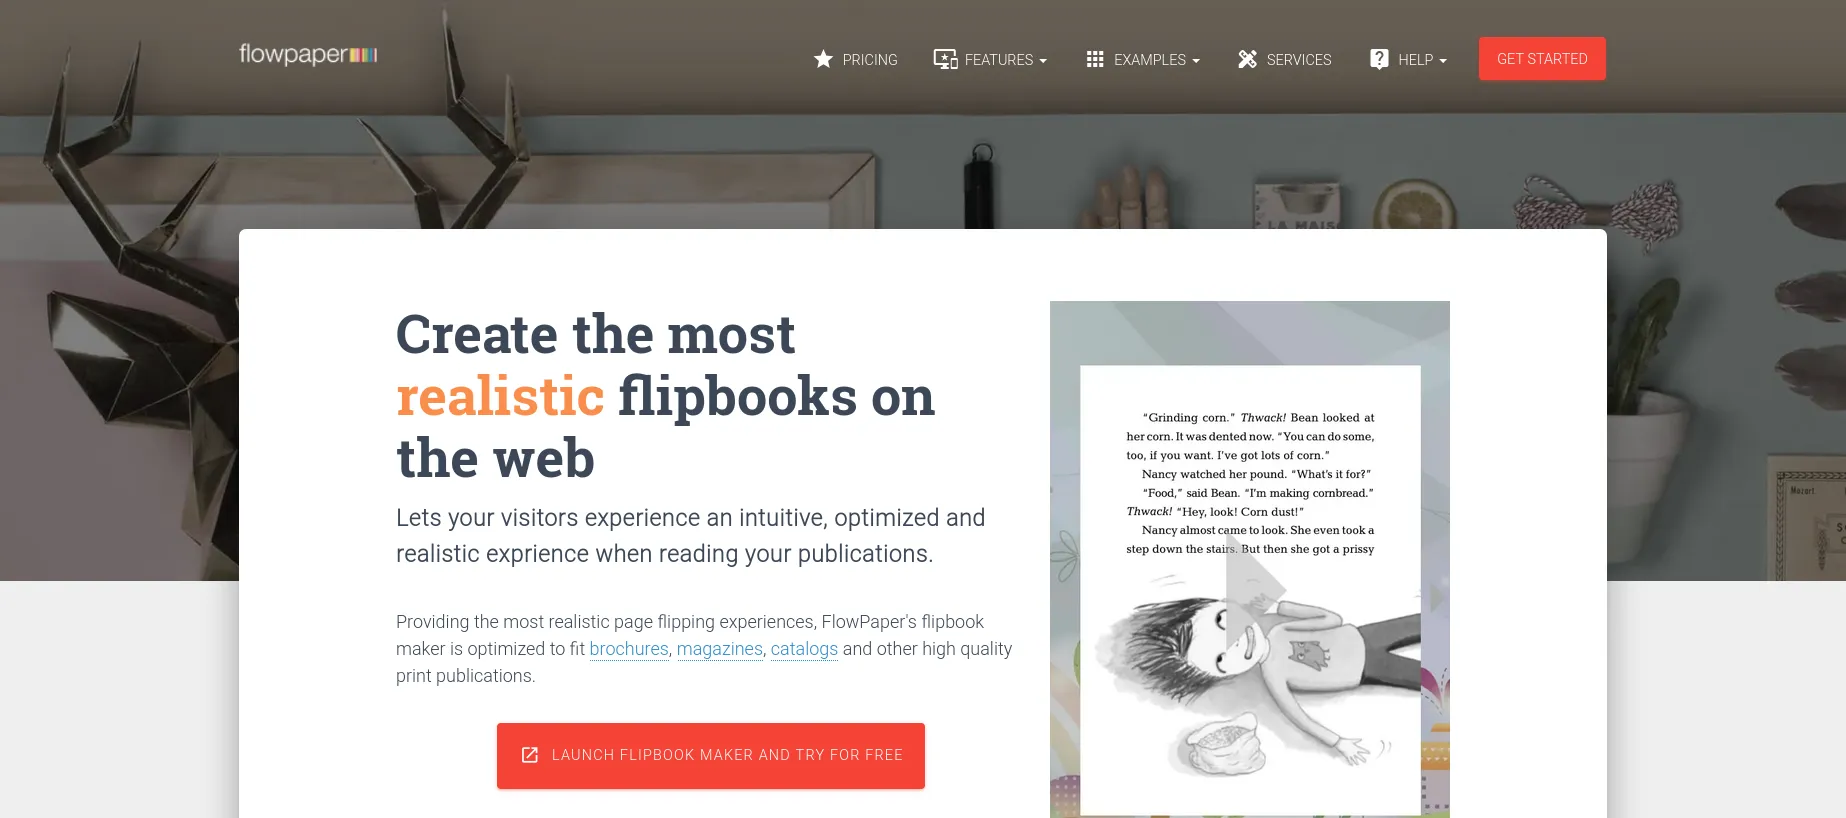 Flowpaper flipbook software